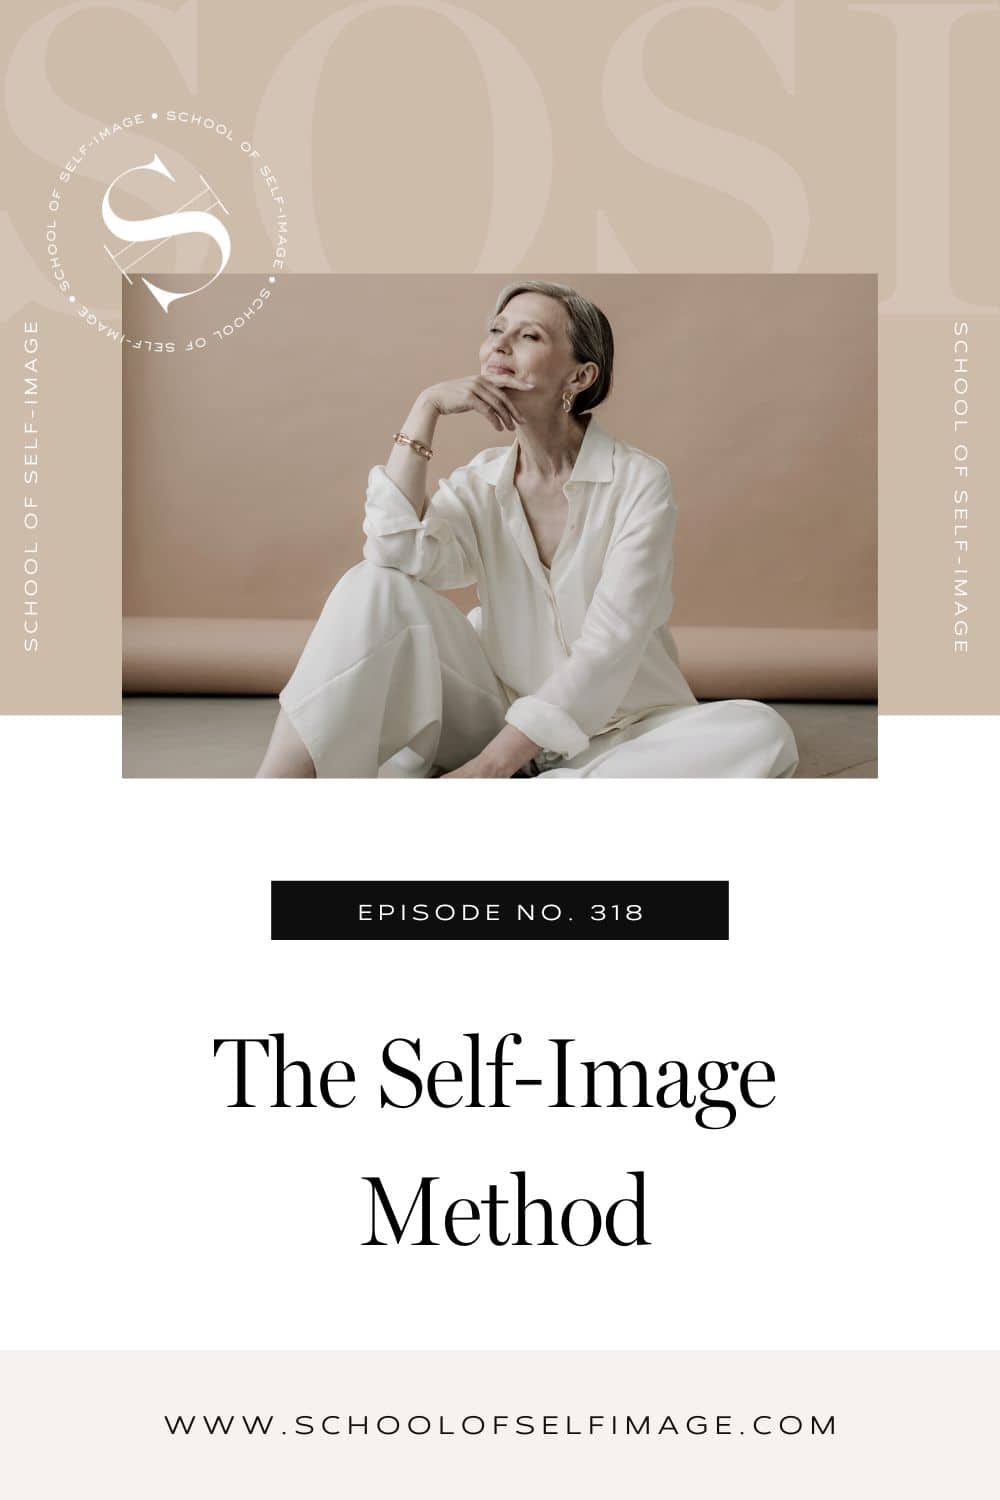 The Self-Image Method